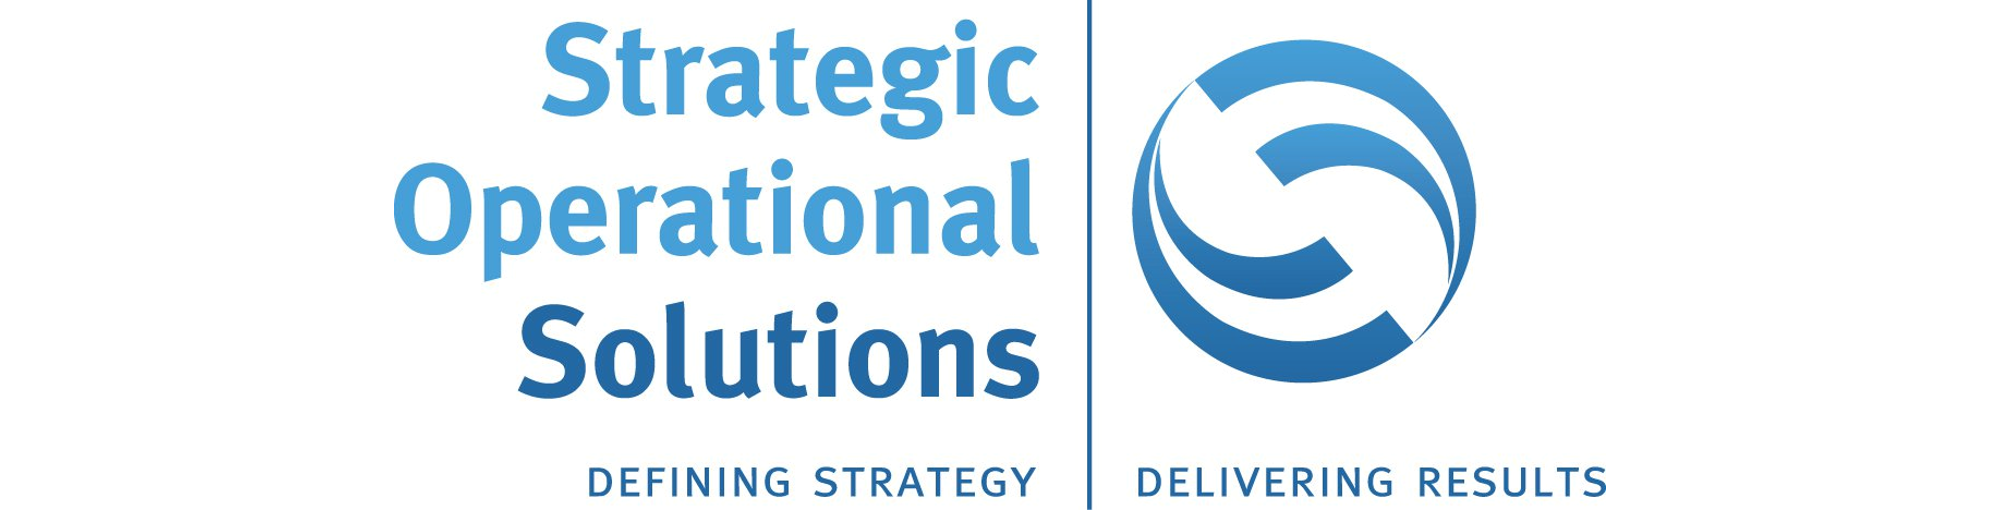 Strategic Operational Solutions